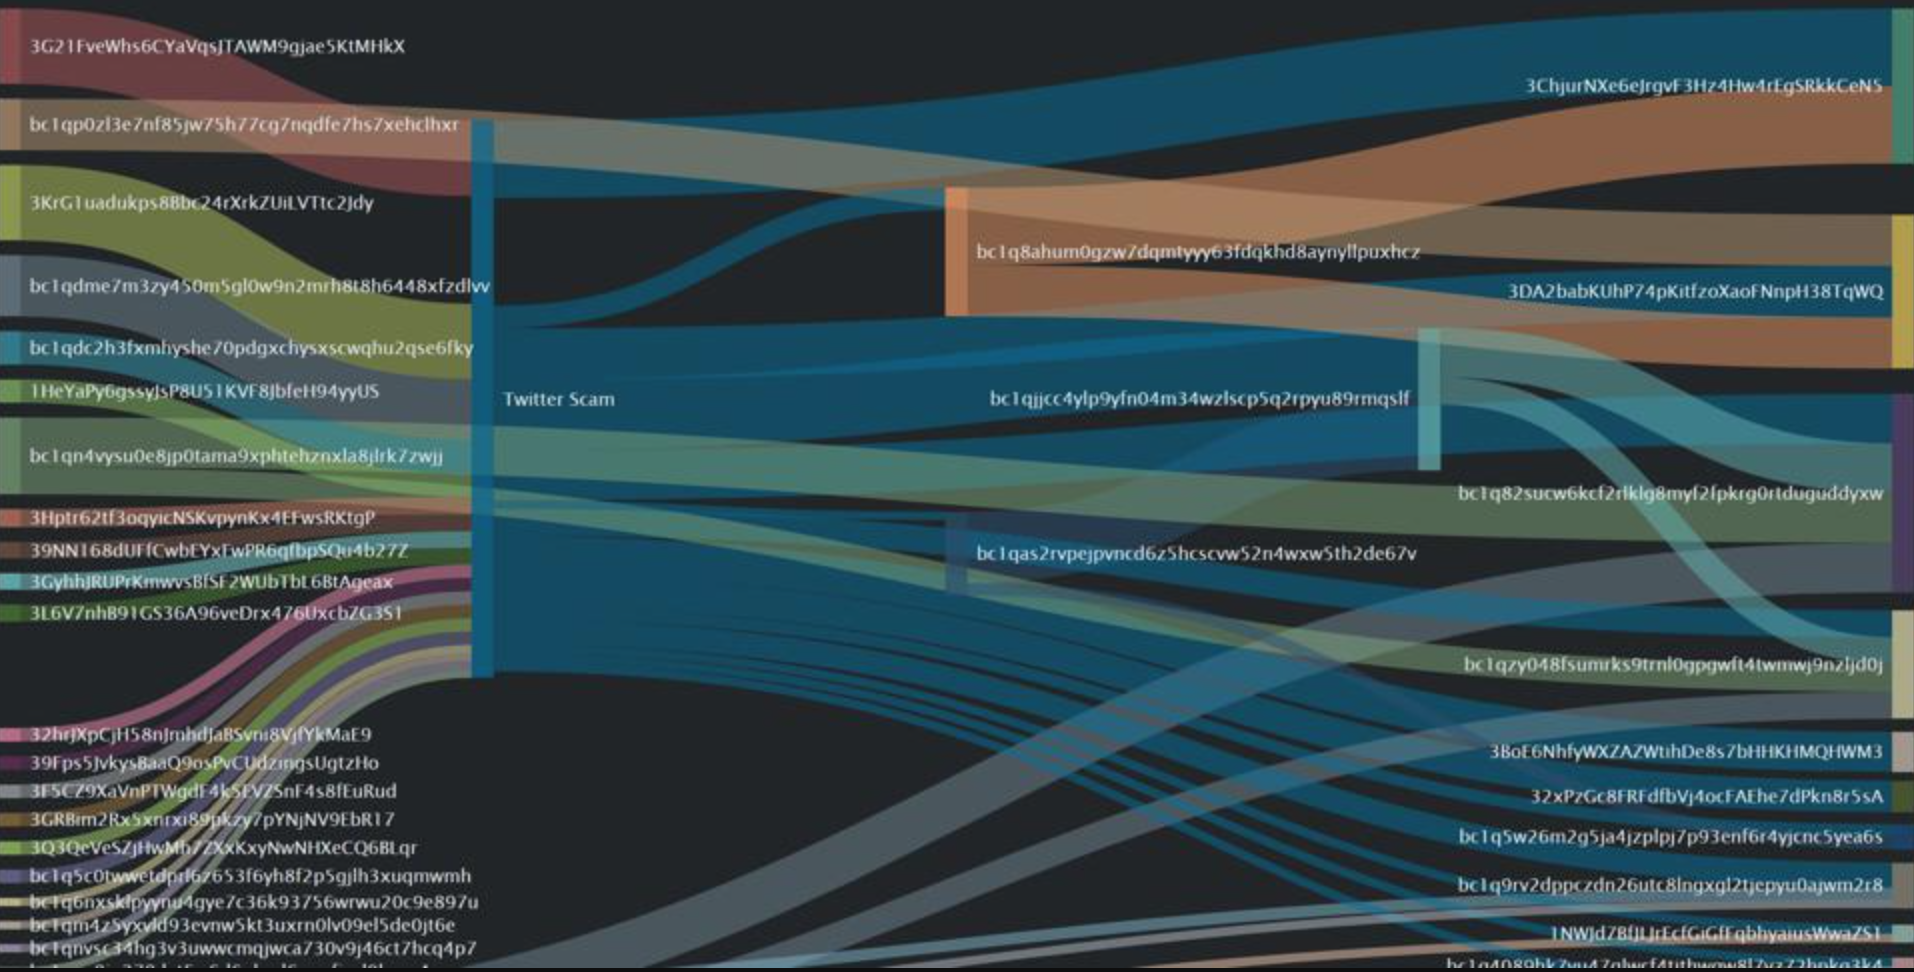 Sankey Diagram with Twitter Scam addresses aggregated. Source: <a href="https://inca.digital/products#data">Inca Digital</a> data in Splunk